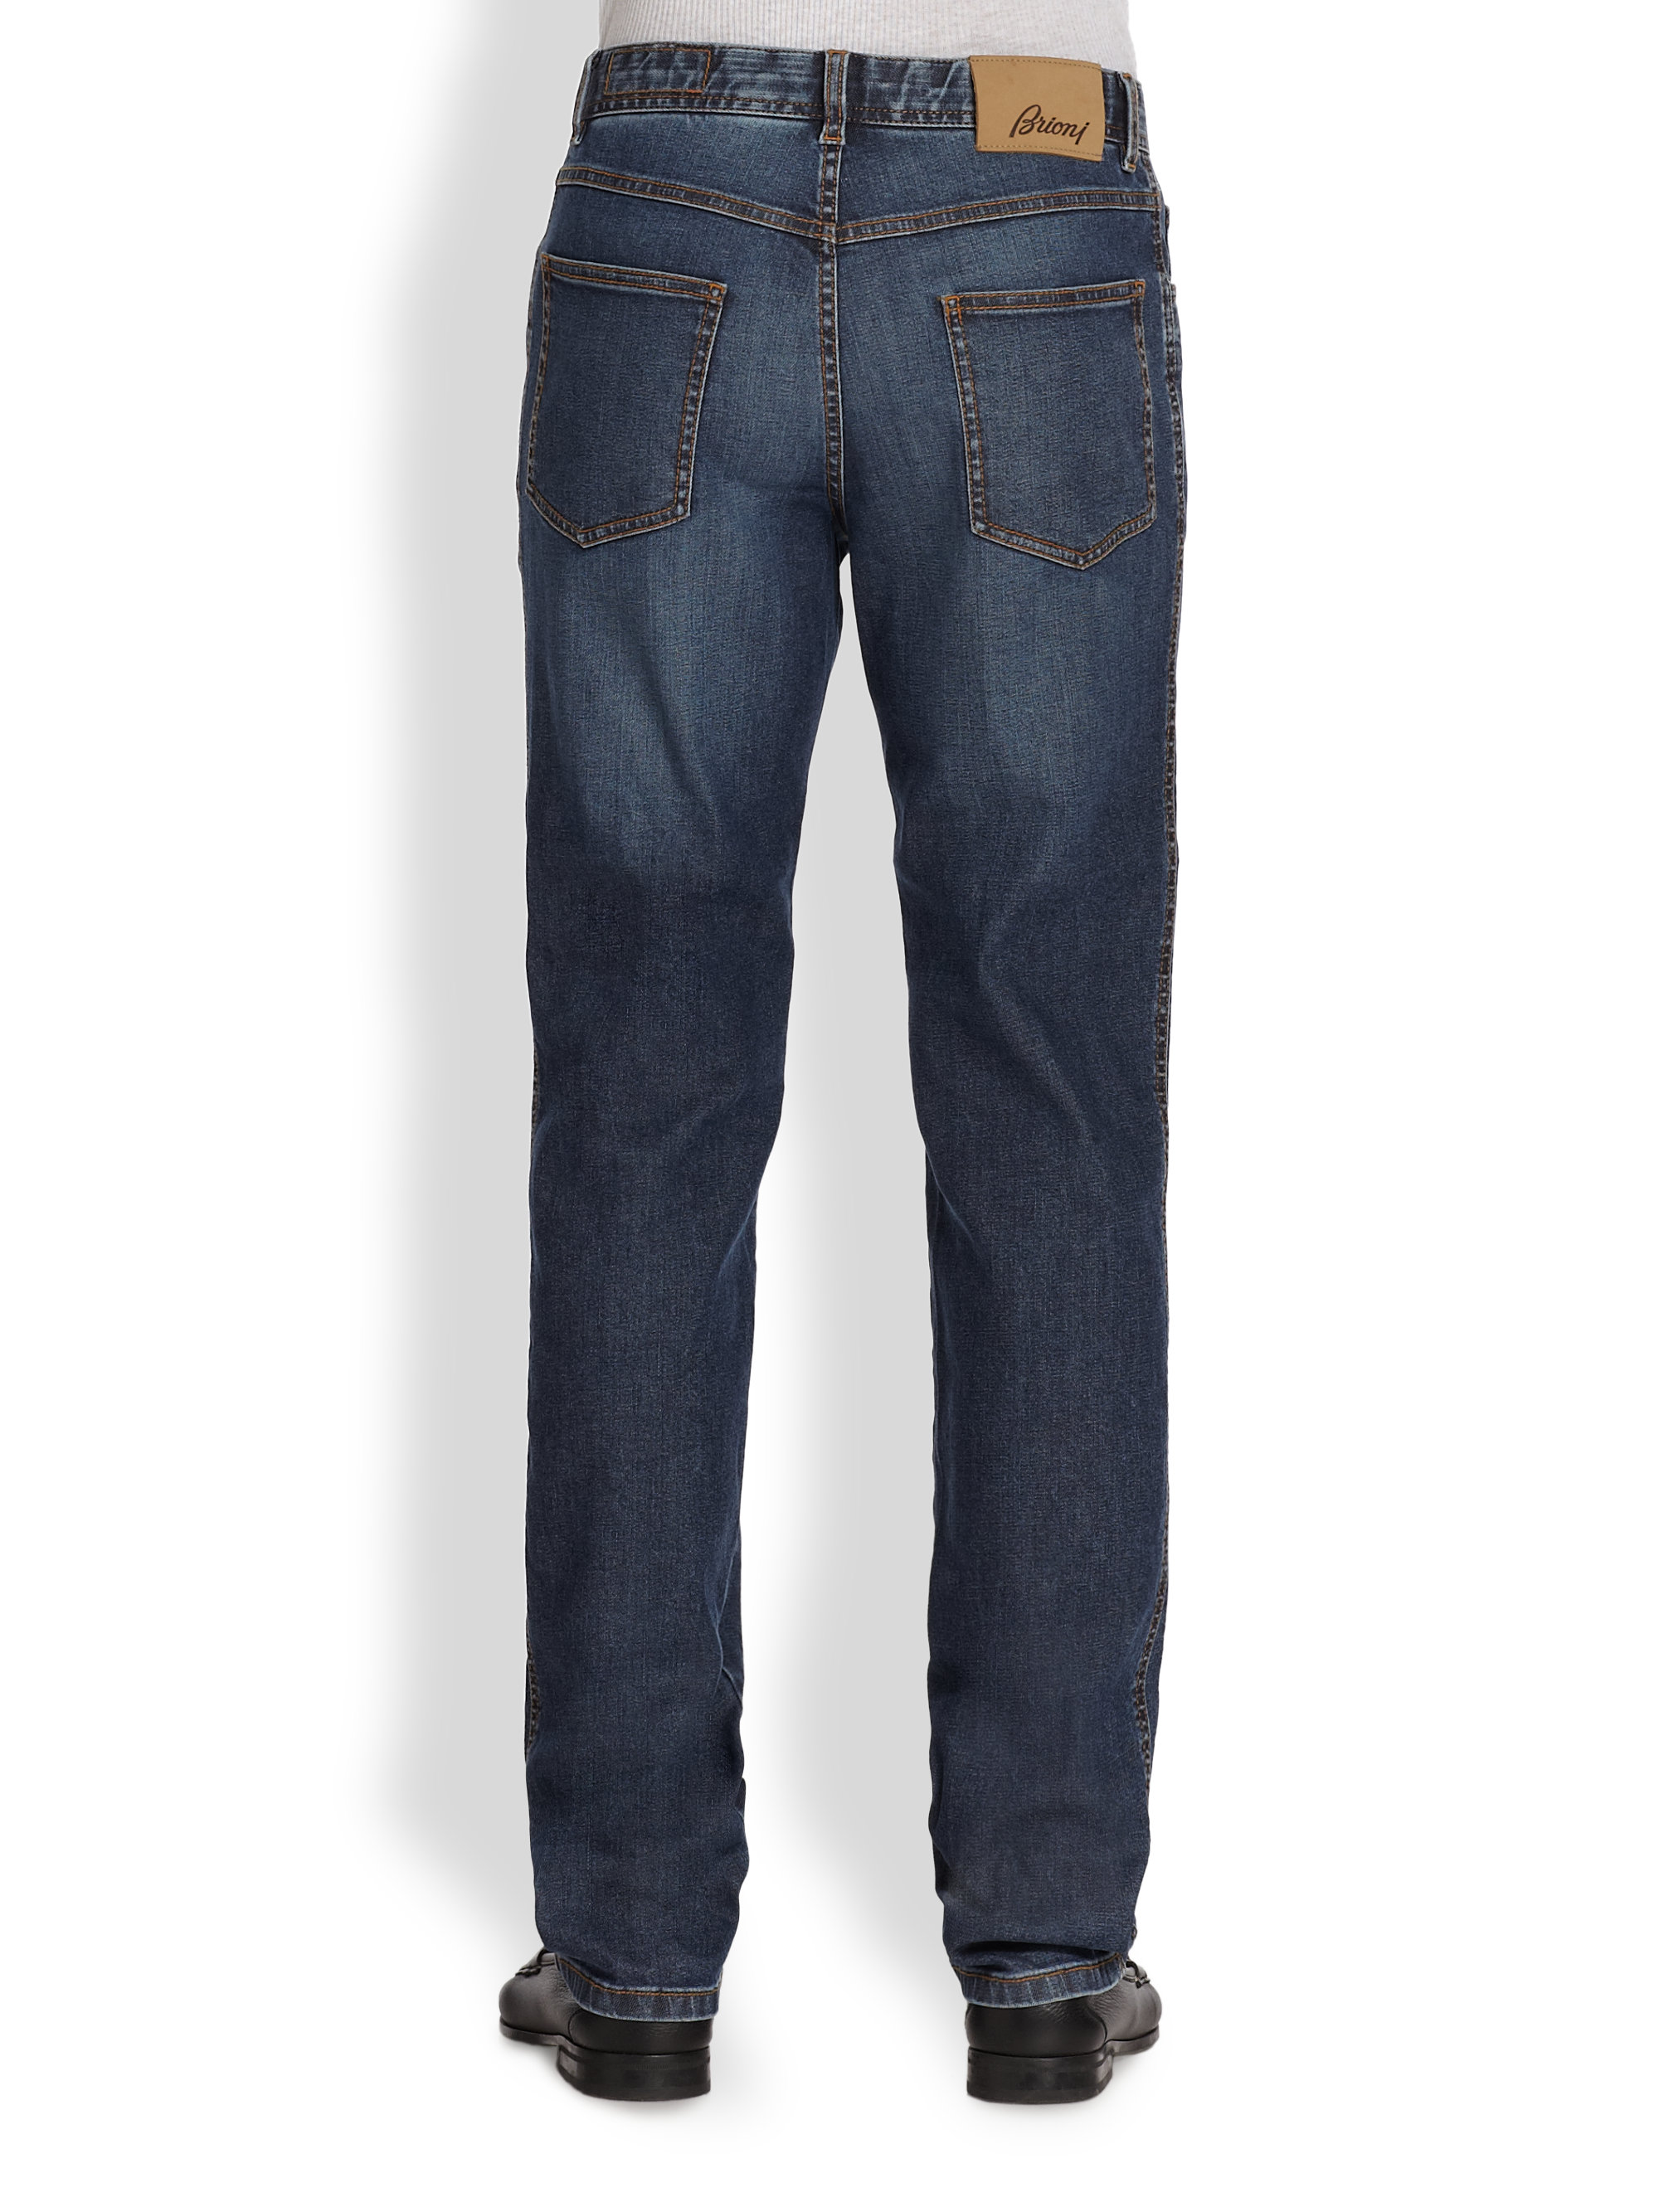 Lyst - Brioni Avanti Medium-Wash Denim Jeans in Blue for Men